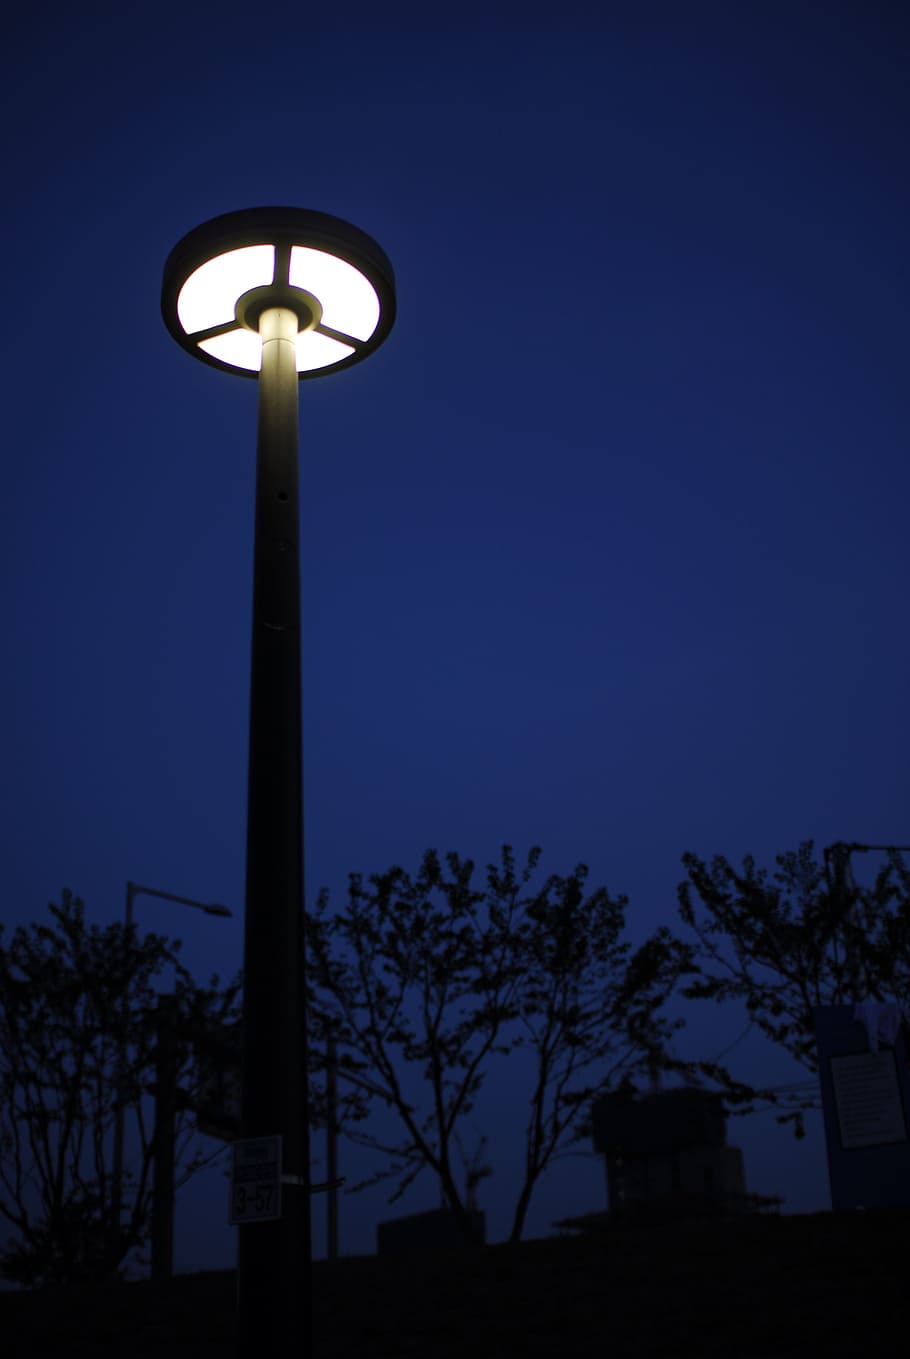 street lights, night, lighting, street Light, electric Lamp, lighting Equipment, illuminated, lantern, dusk, sky